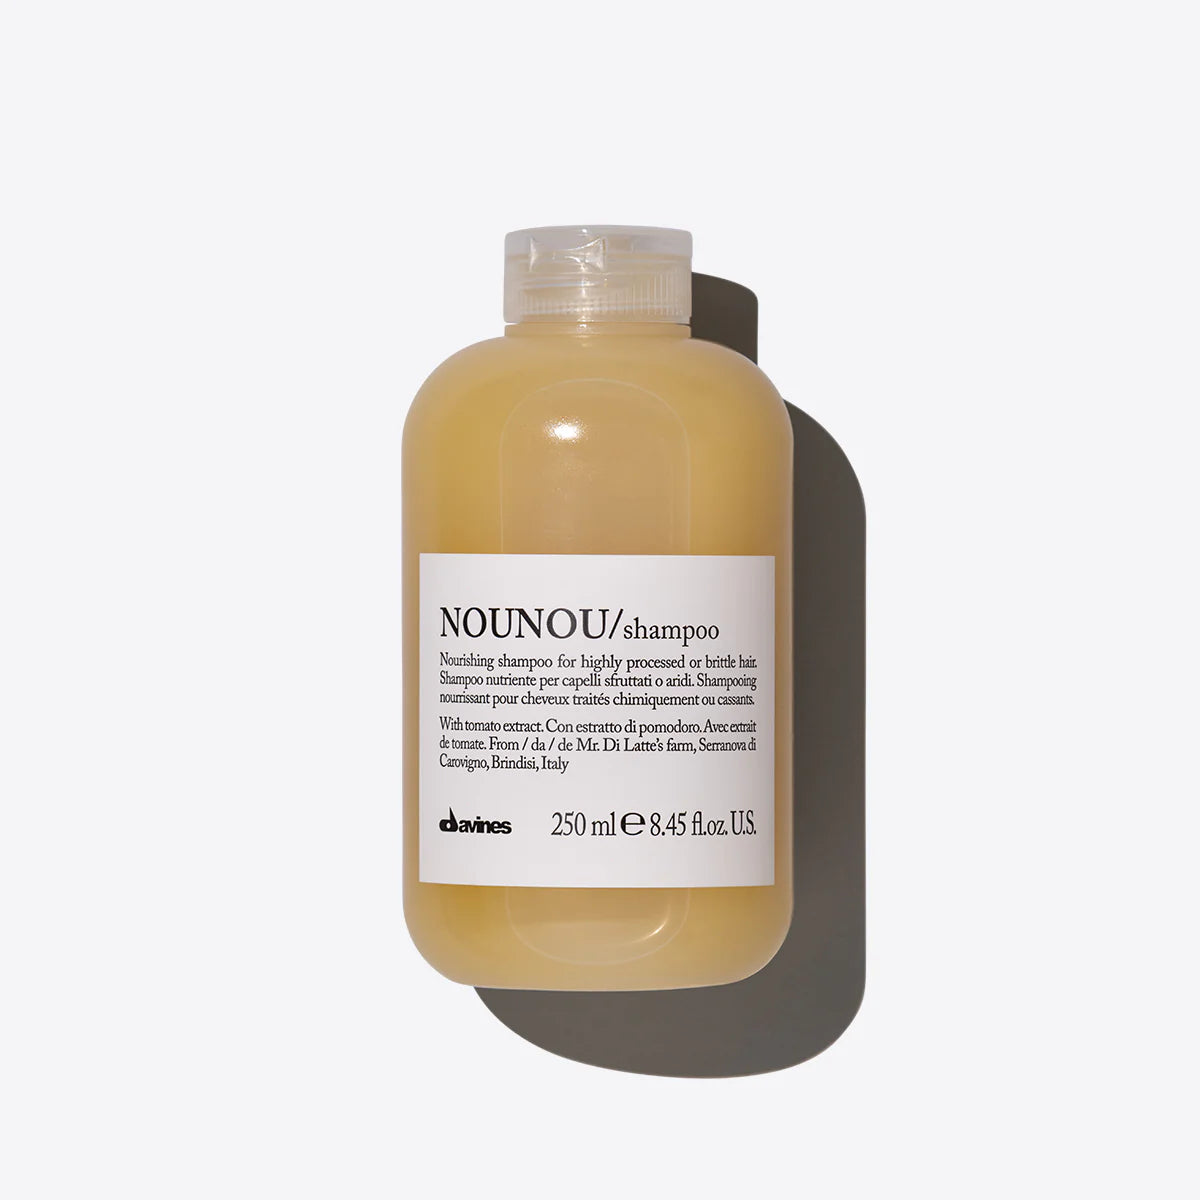 NOUNOU/ Shampoo